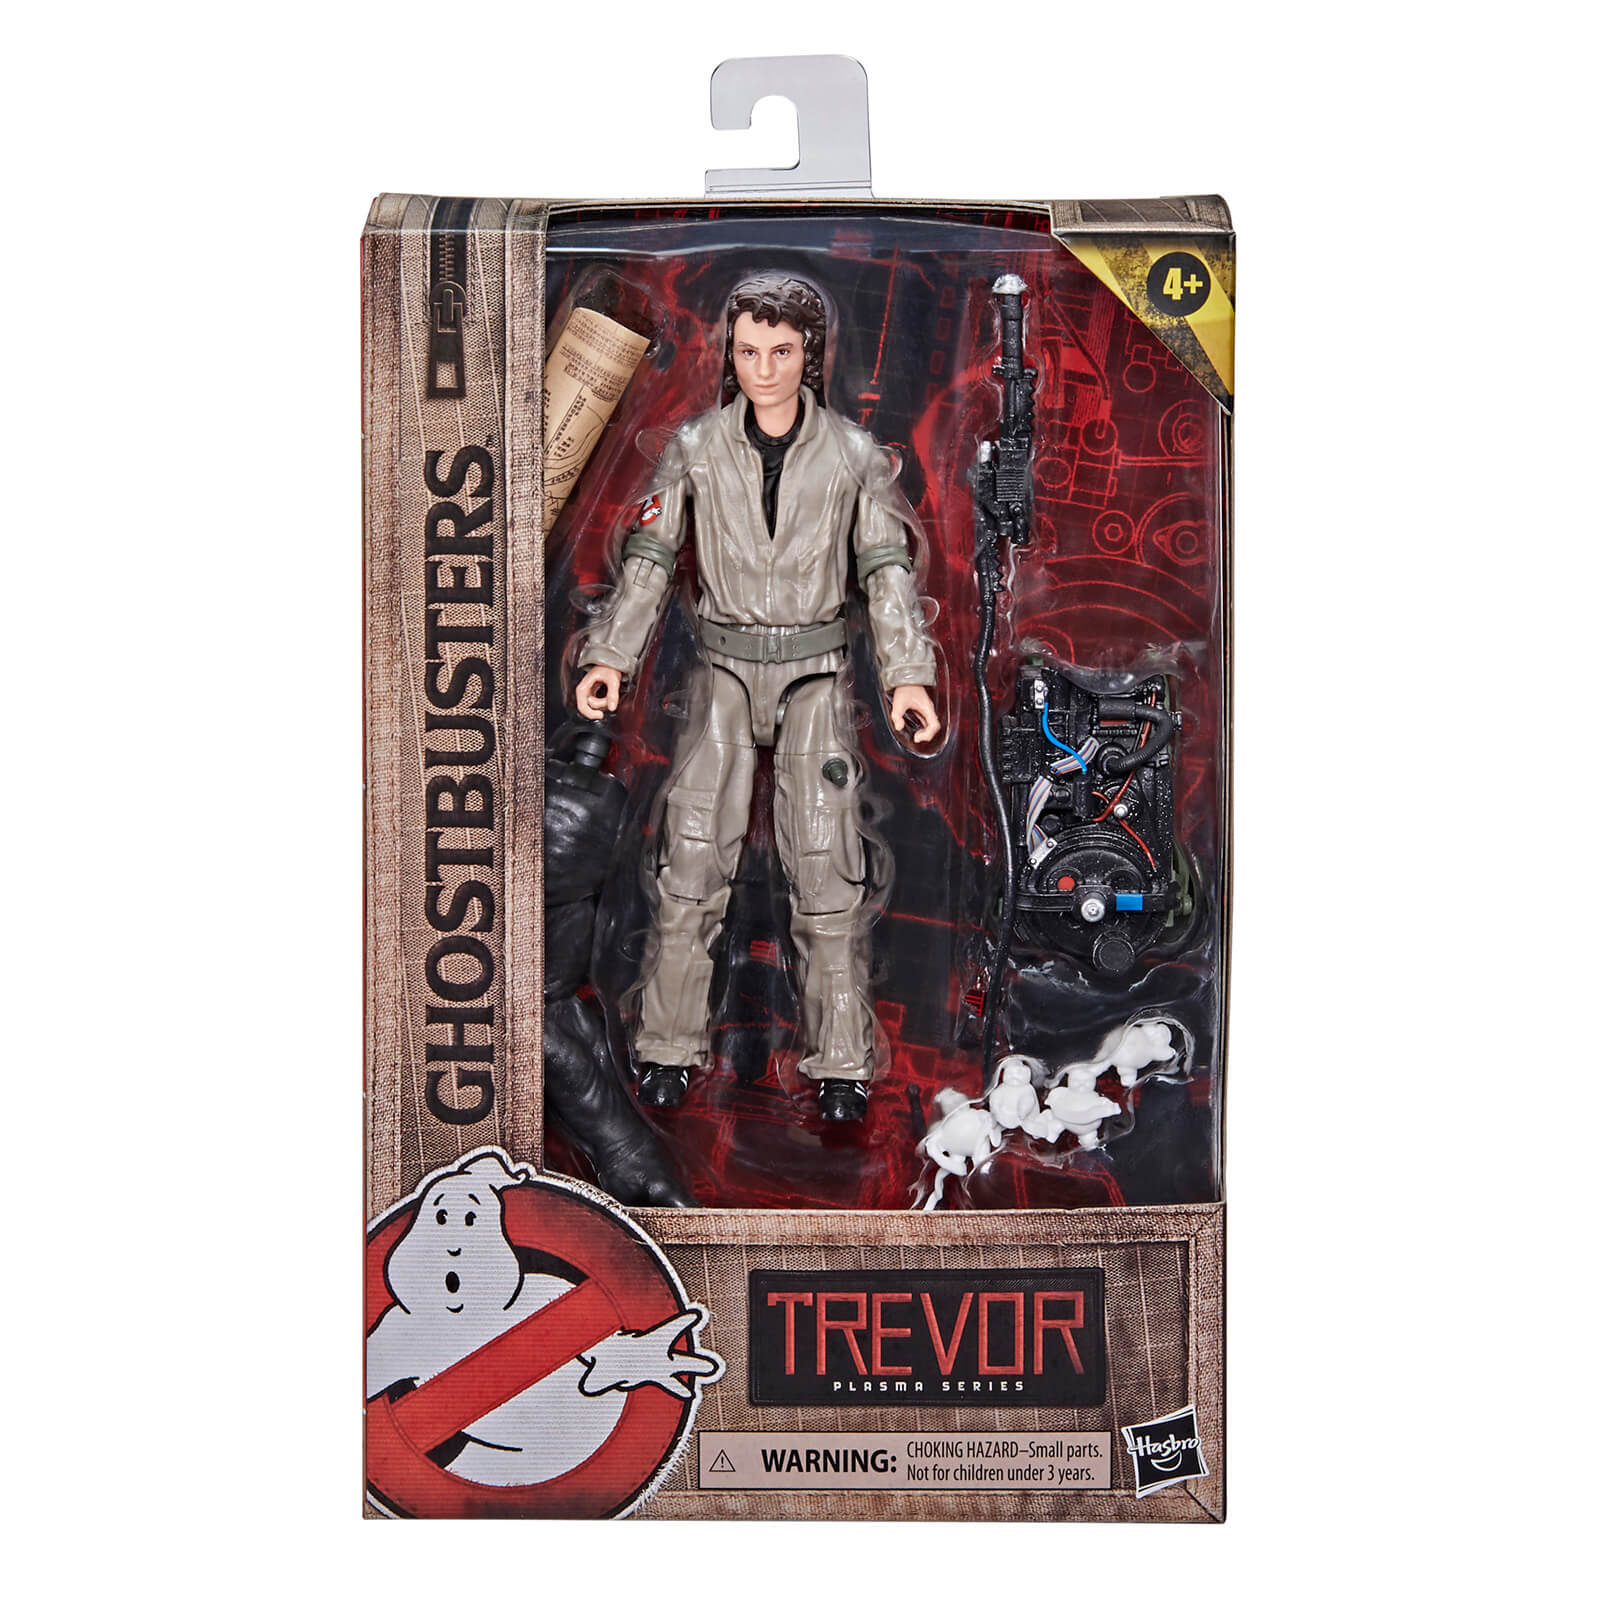 Ghostbusters Plasma Series TREVOR 15cm Toy Figure